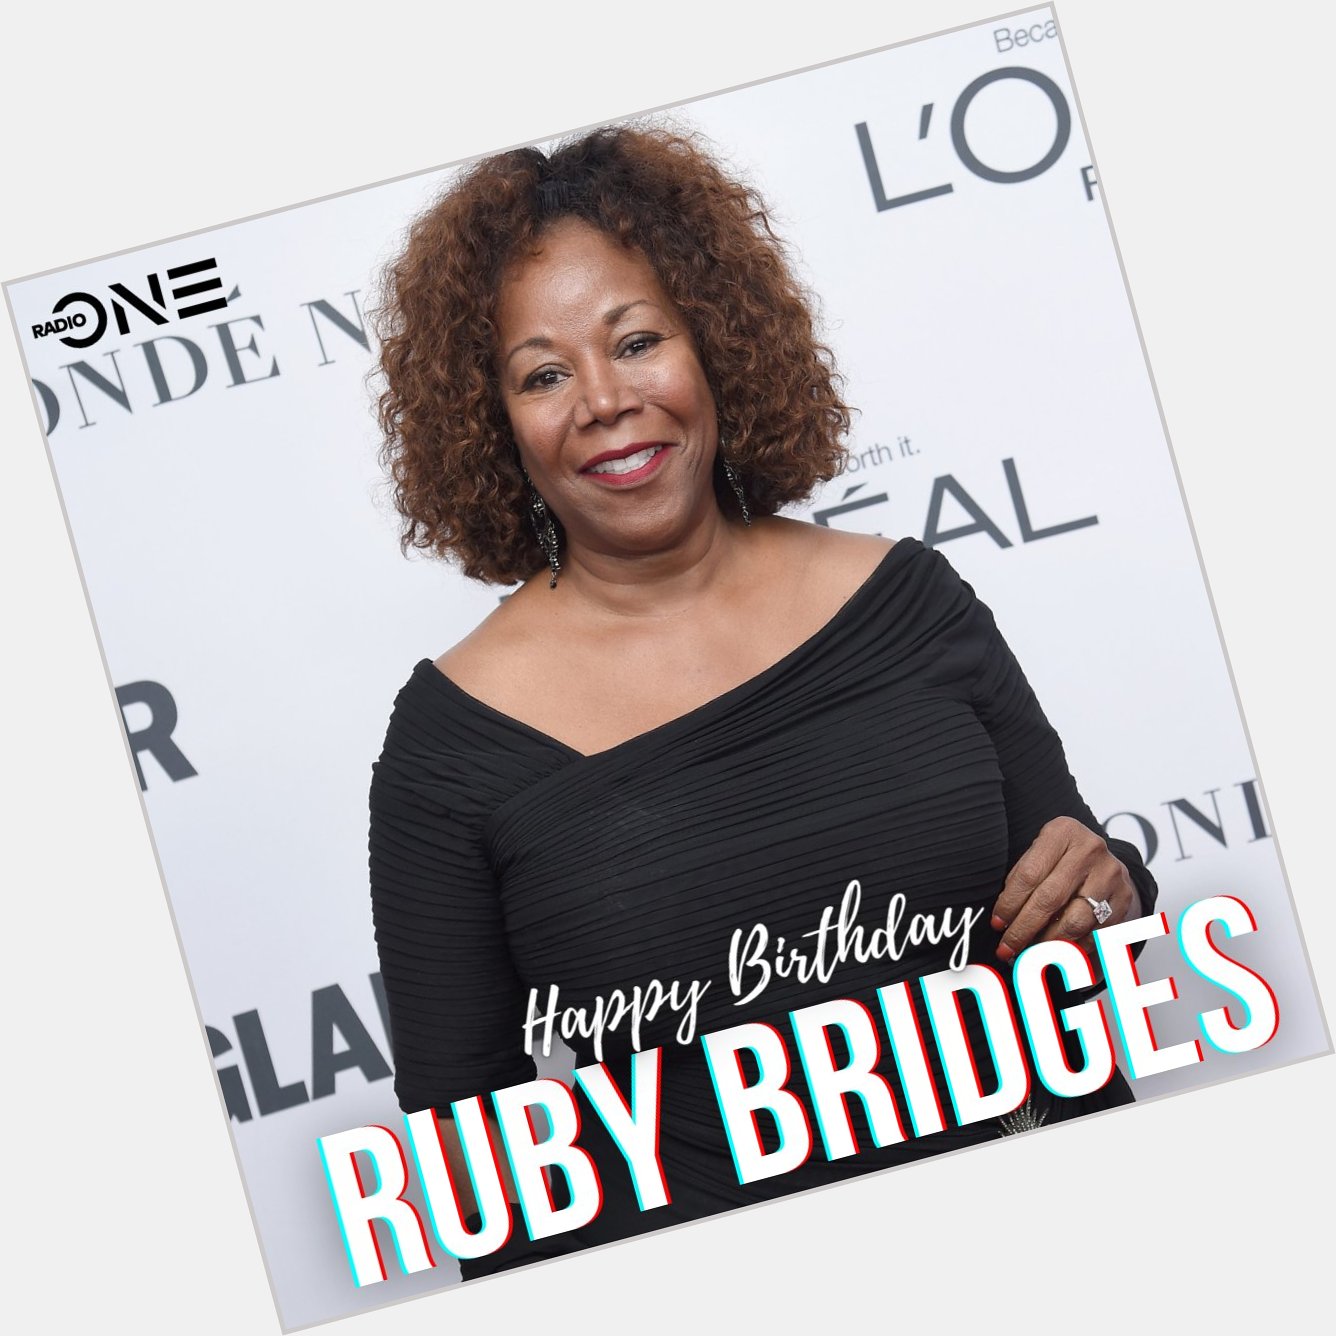 Wishing Civil Rights activist Ruby Bridges a happy birthday 